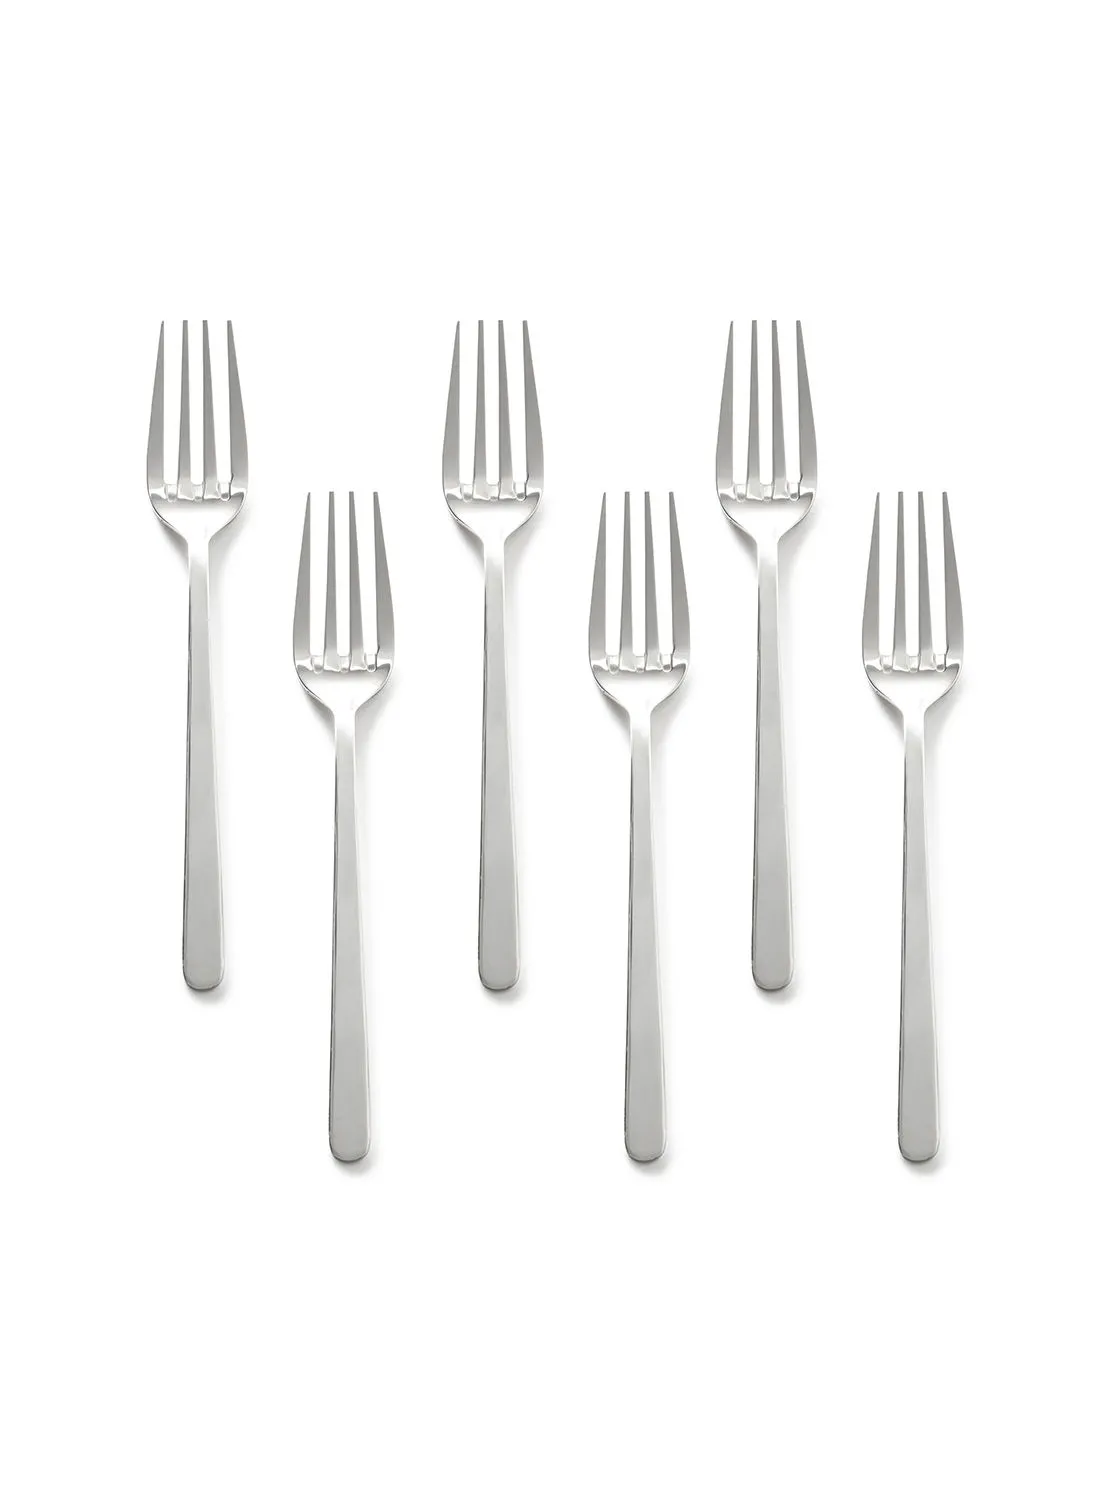 noon east 6 Piece Forks Set - Made Of Stainless Steel - Silverware Flatware - Fork Set - Serves 6 - Design Silver Sail